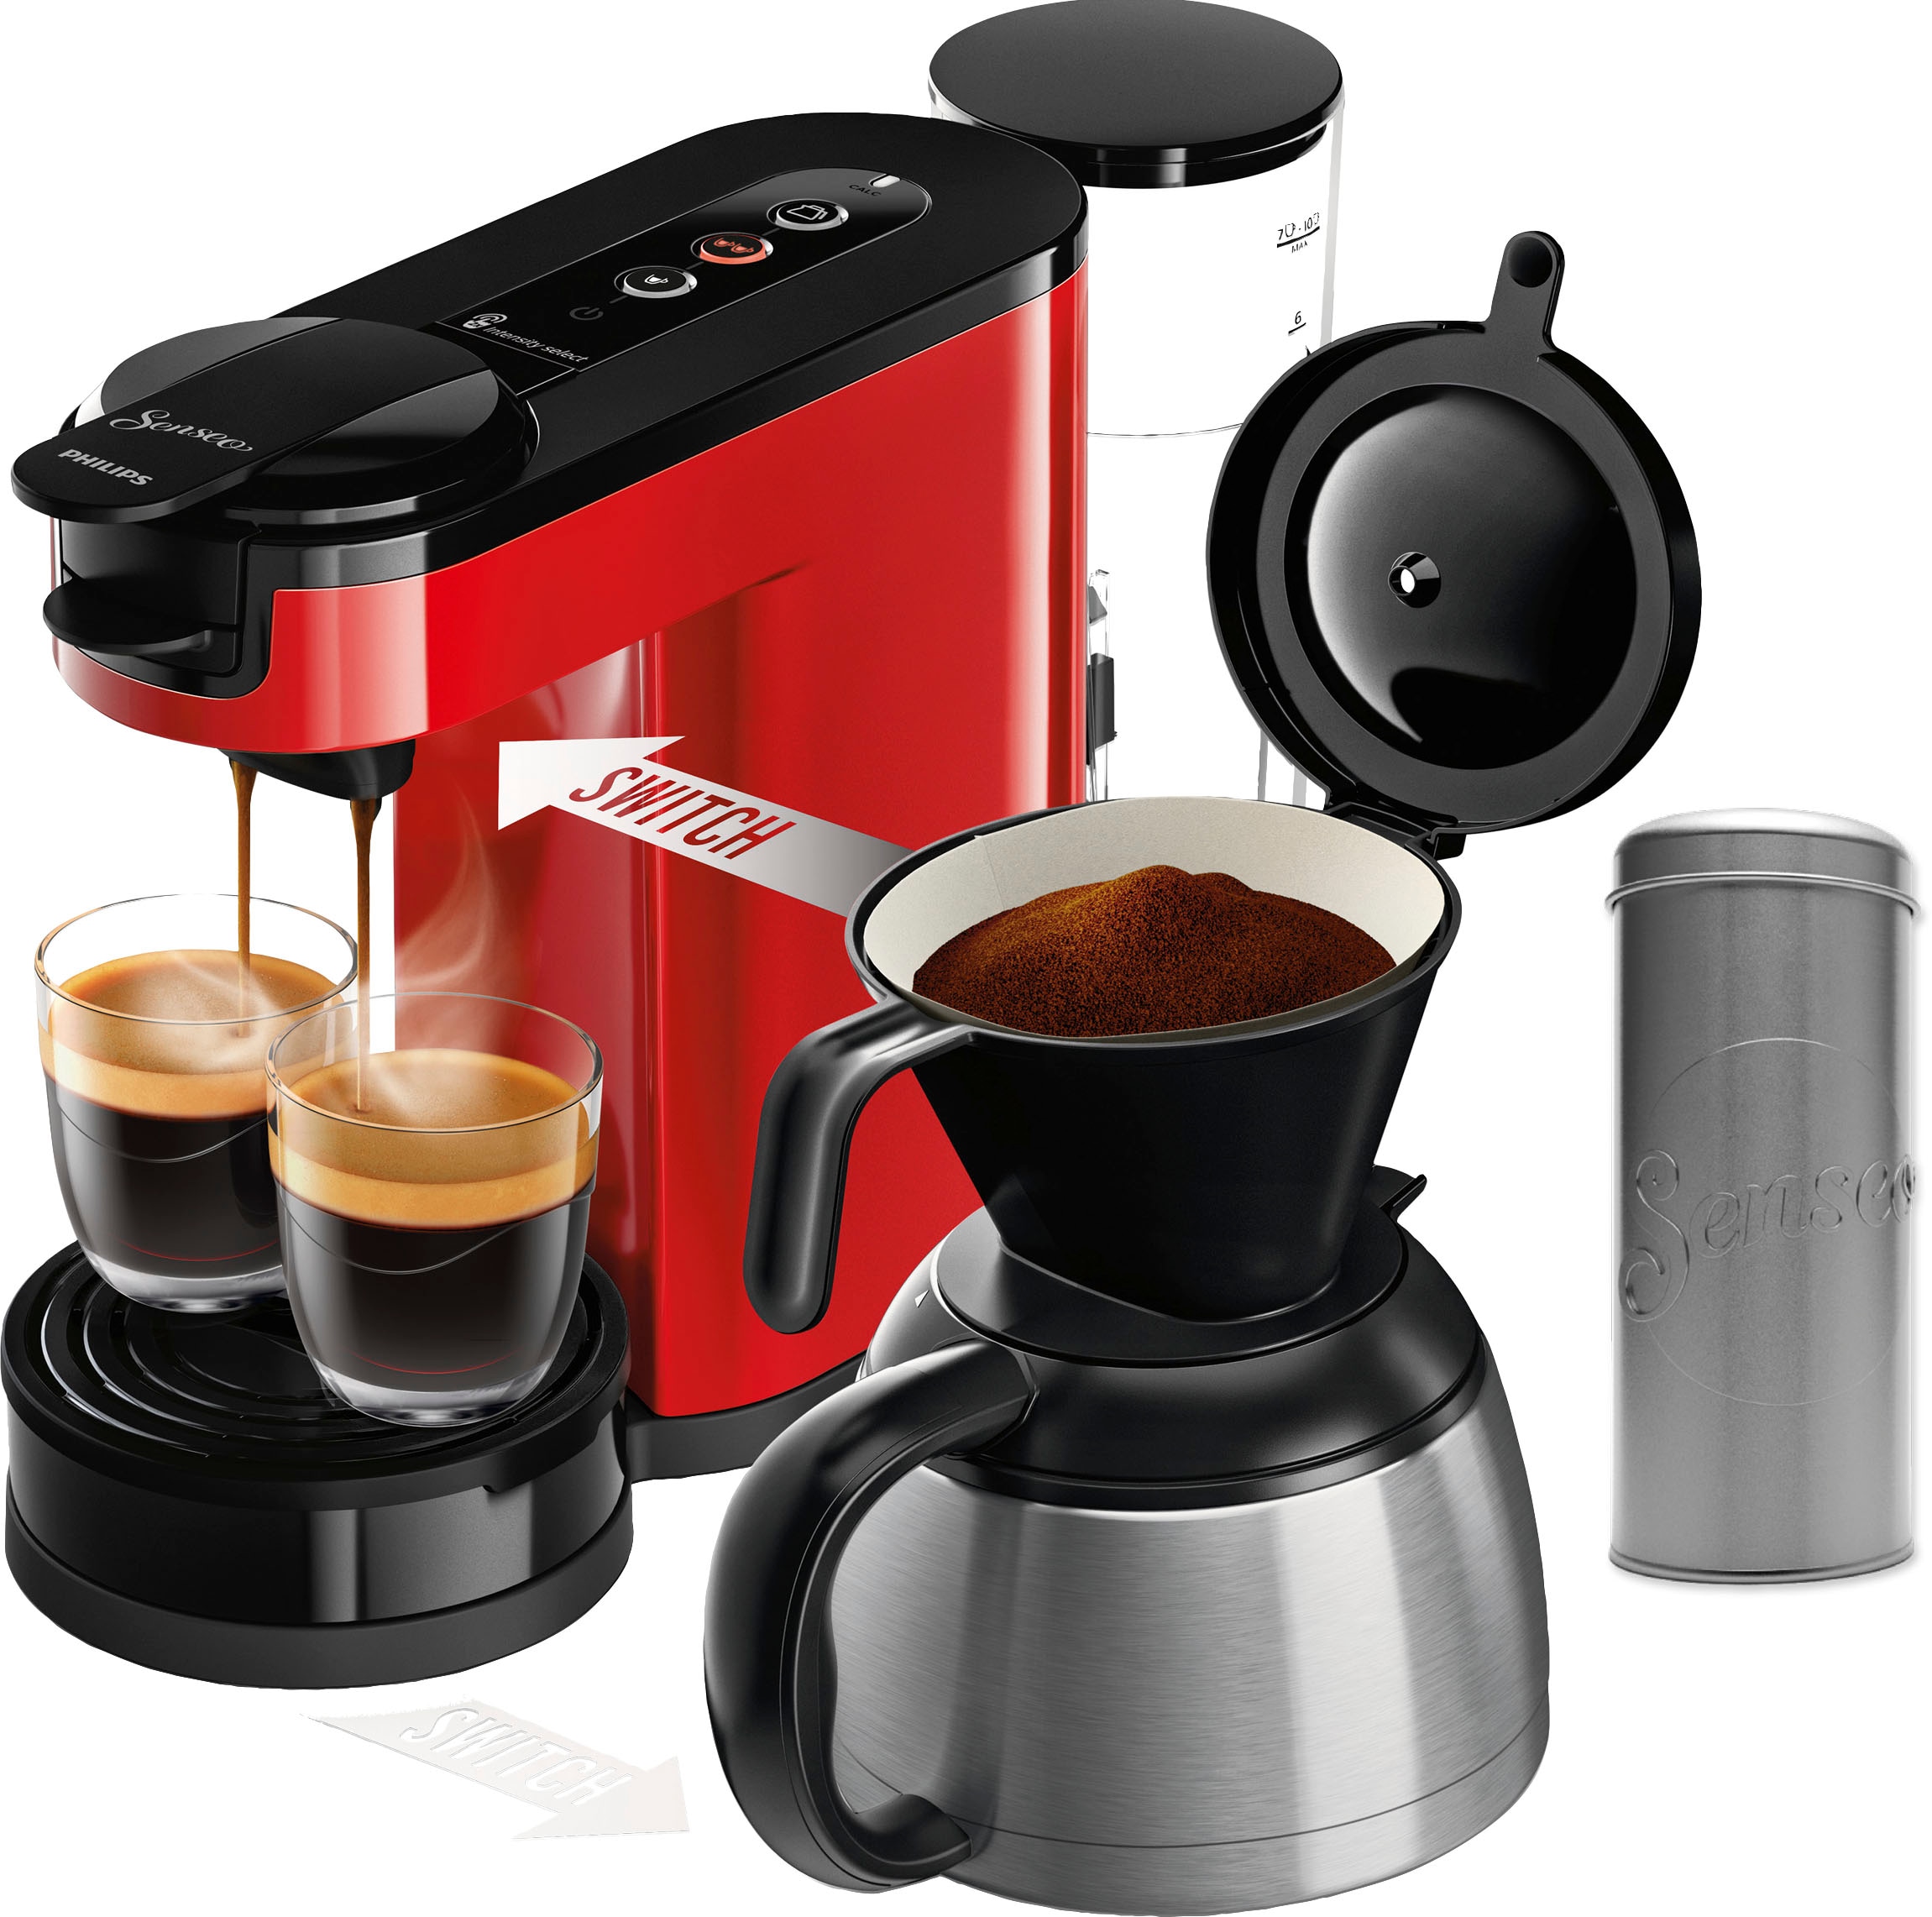 Kaffeepadmaschine »Switch HD6592/84«, 1 l Kaffeekanne, inkl. Kaffeepaddose im Wert von...